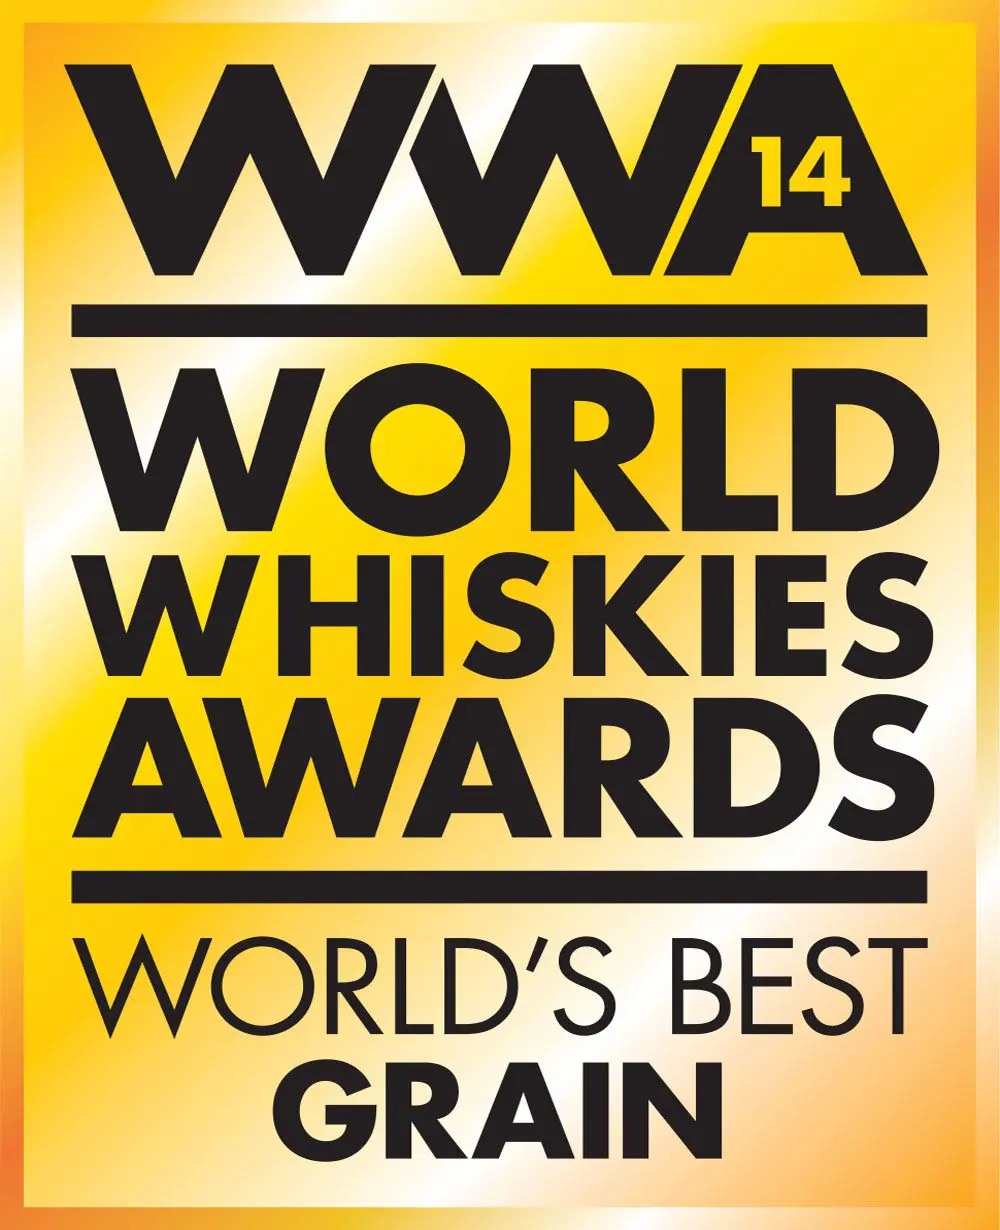 « Meilleur Single Grain 2014 » aux World Whiskies Awards.